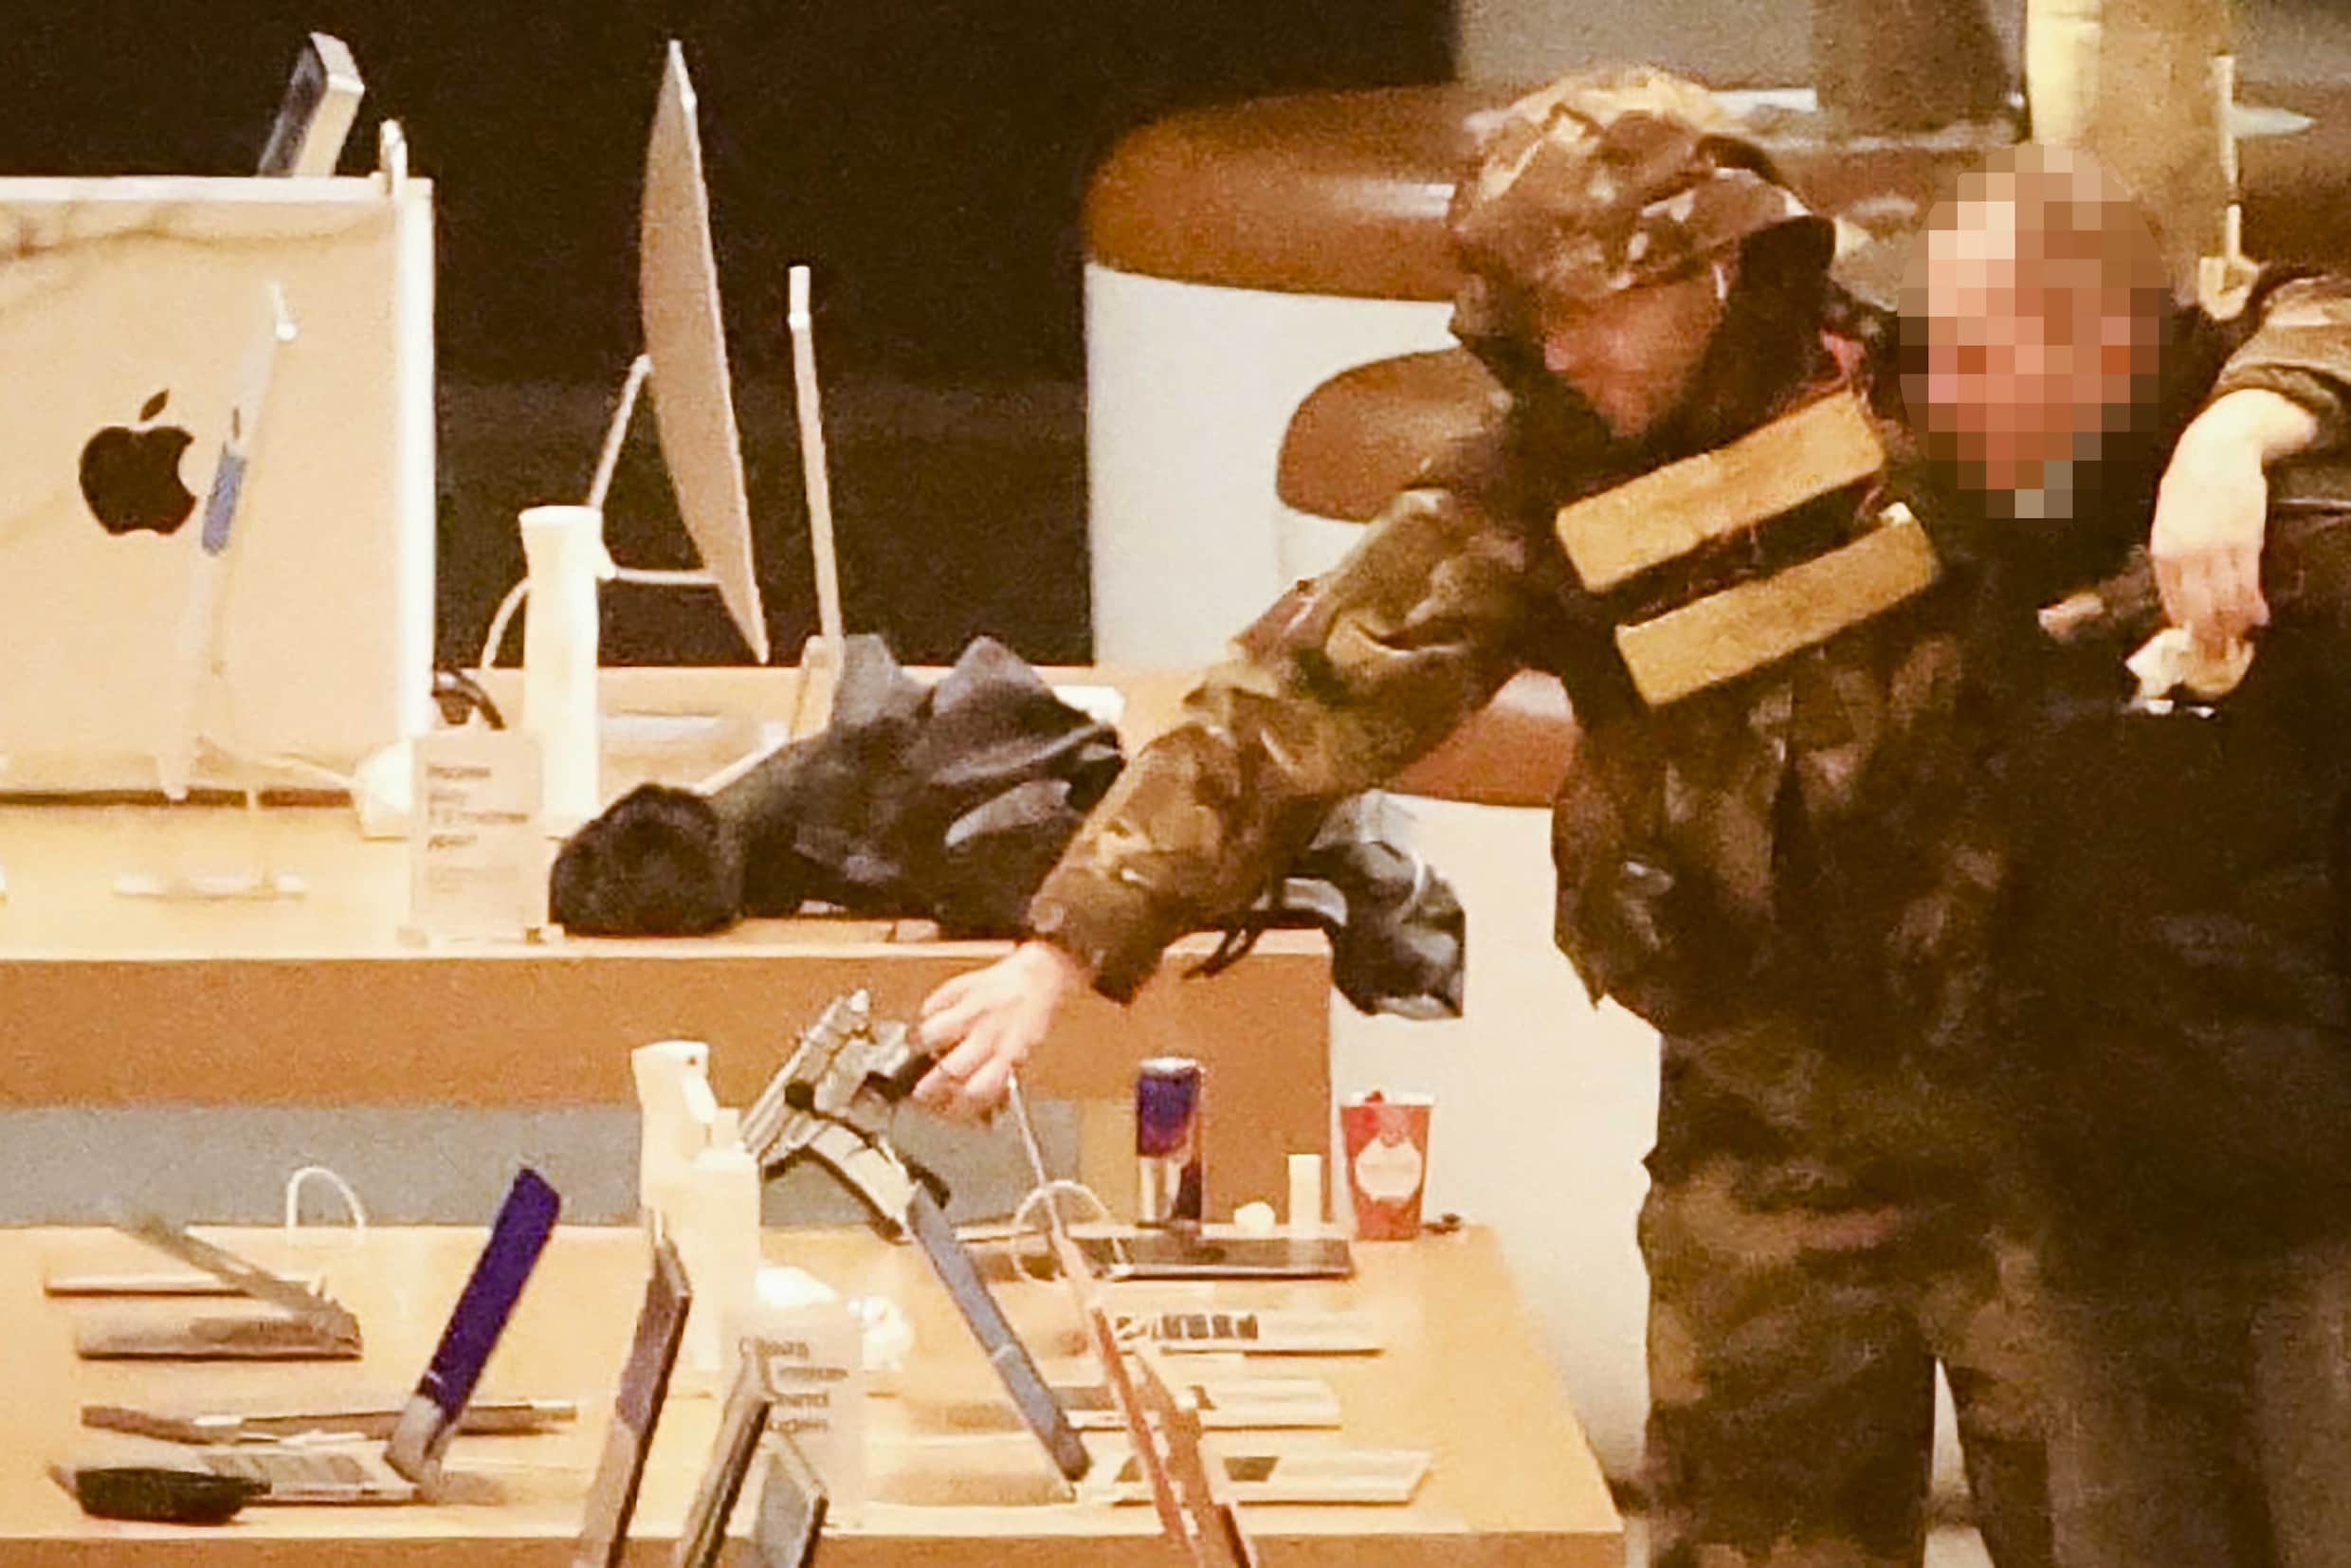 Gijzelnemer Amsterdamse Apple Store had echte explosieven op zijn lichaam